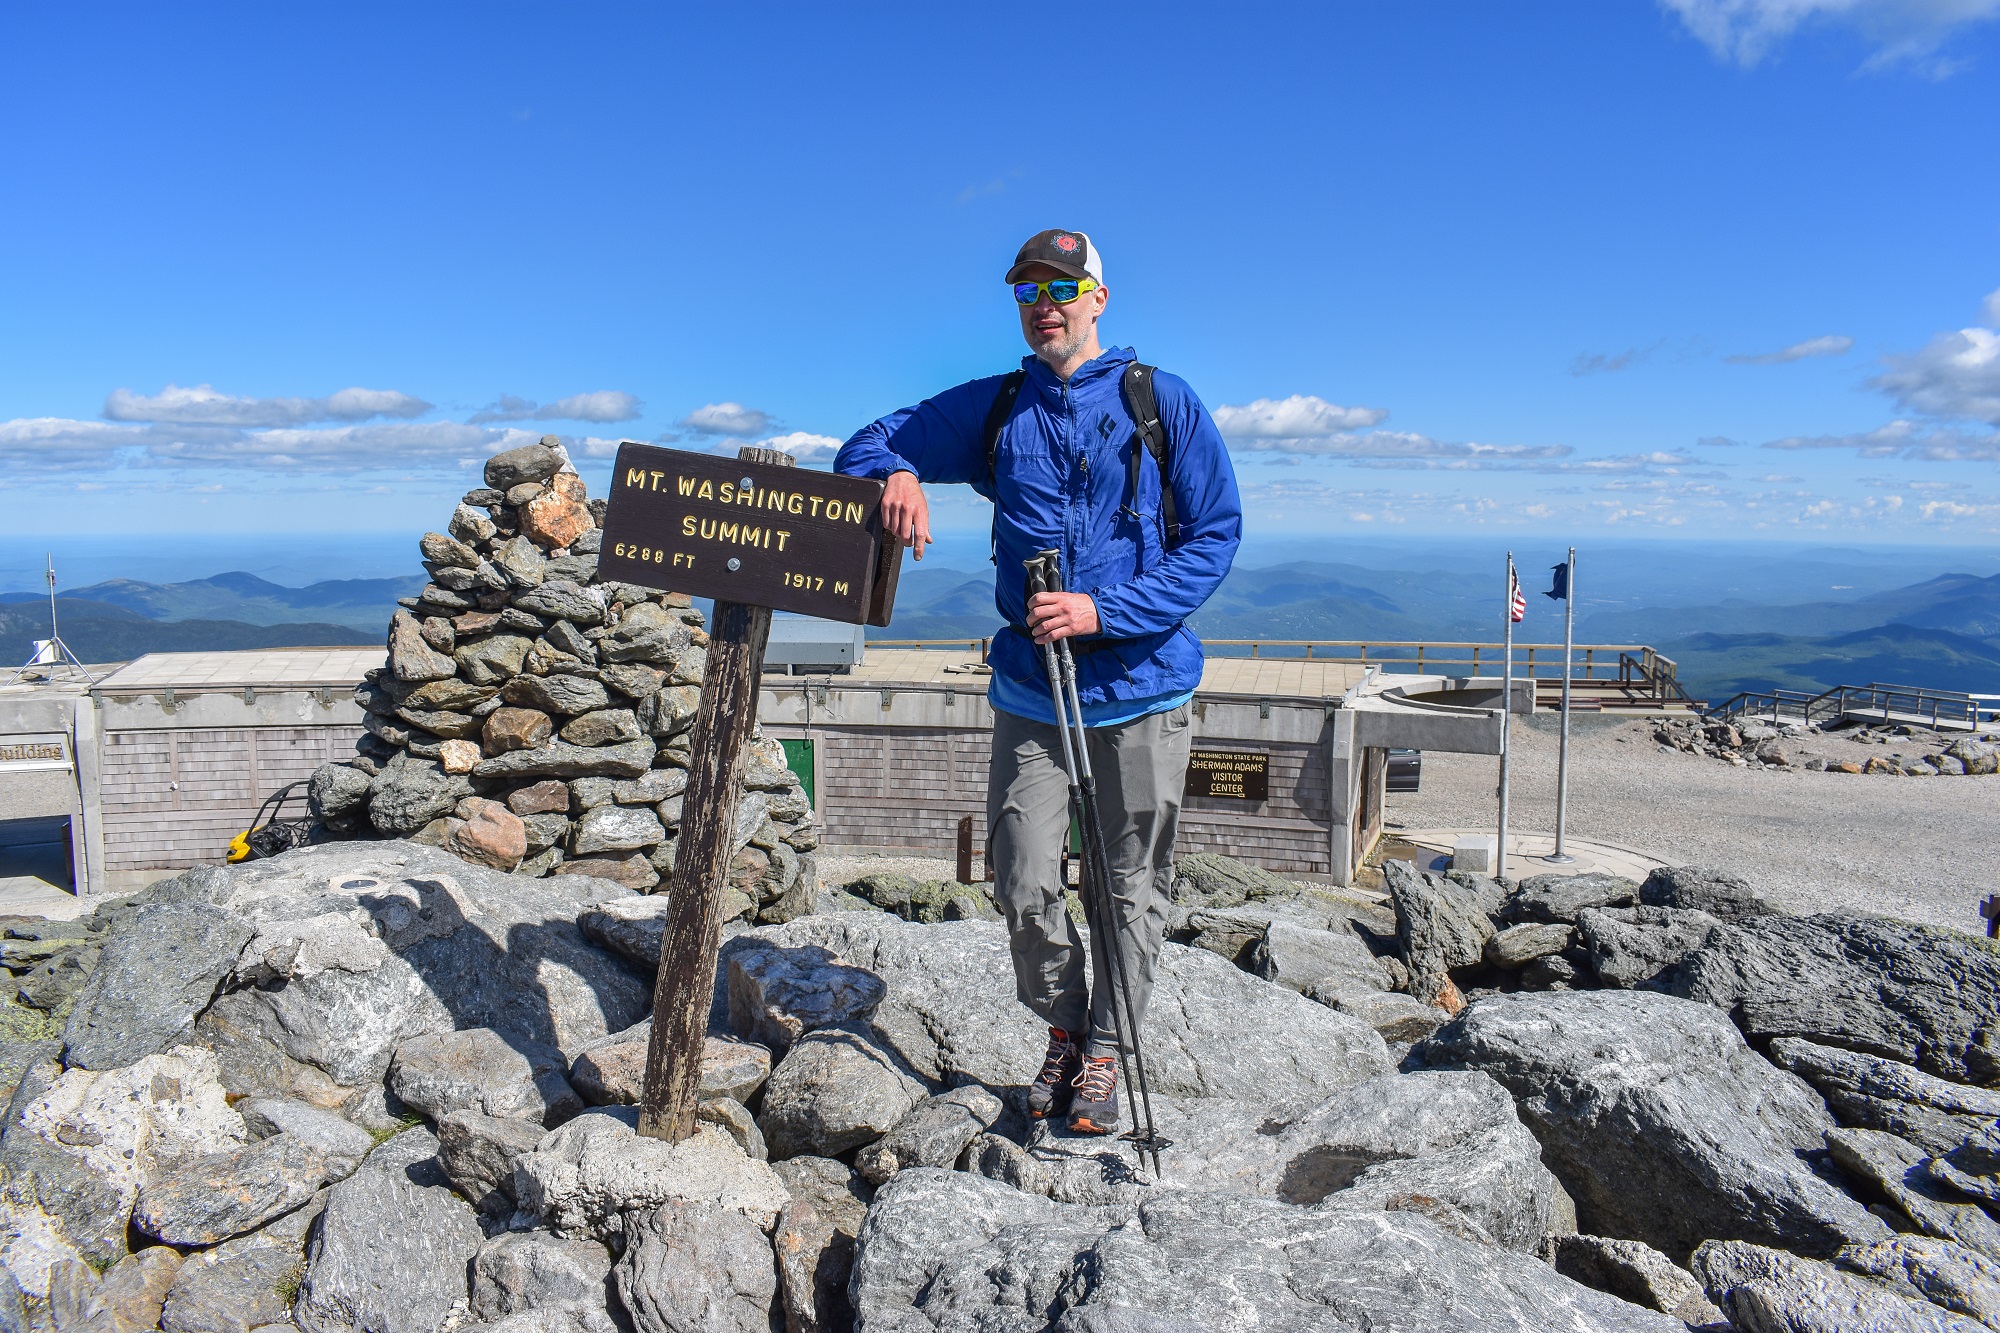 Standing at the summit of Mount Washington 